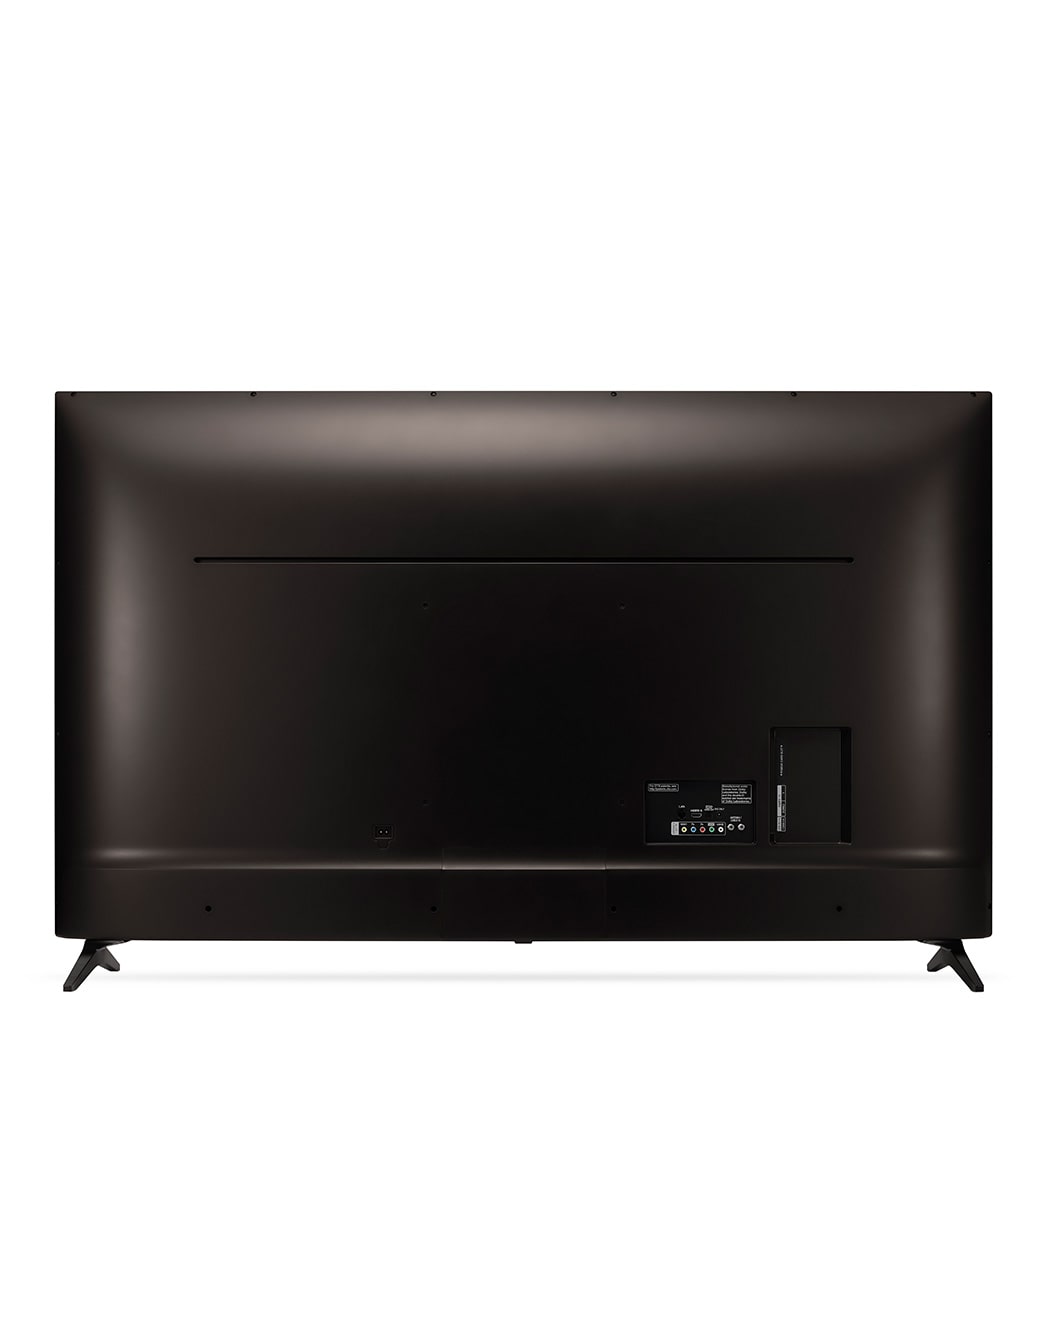 LG UHD TV 55 inch UK6100 Series IPS 4K Display 4K HDR Smart LED TV